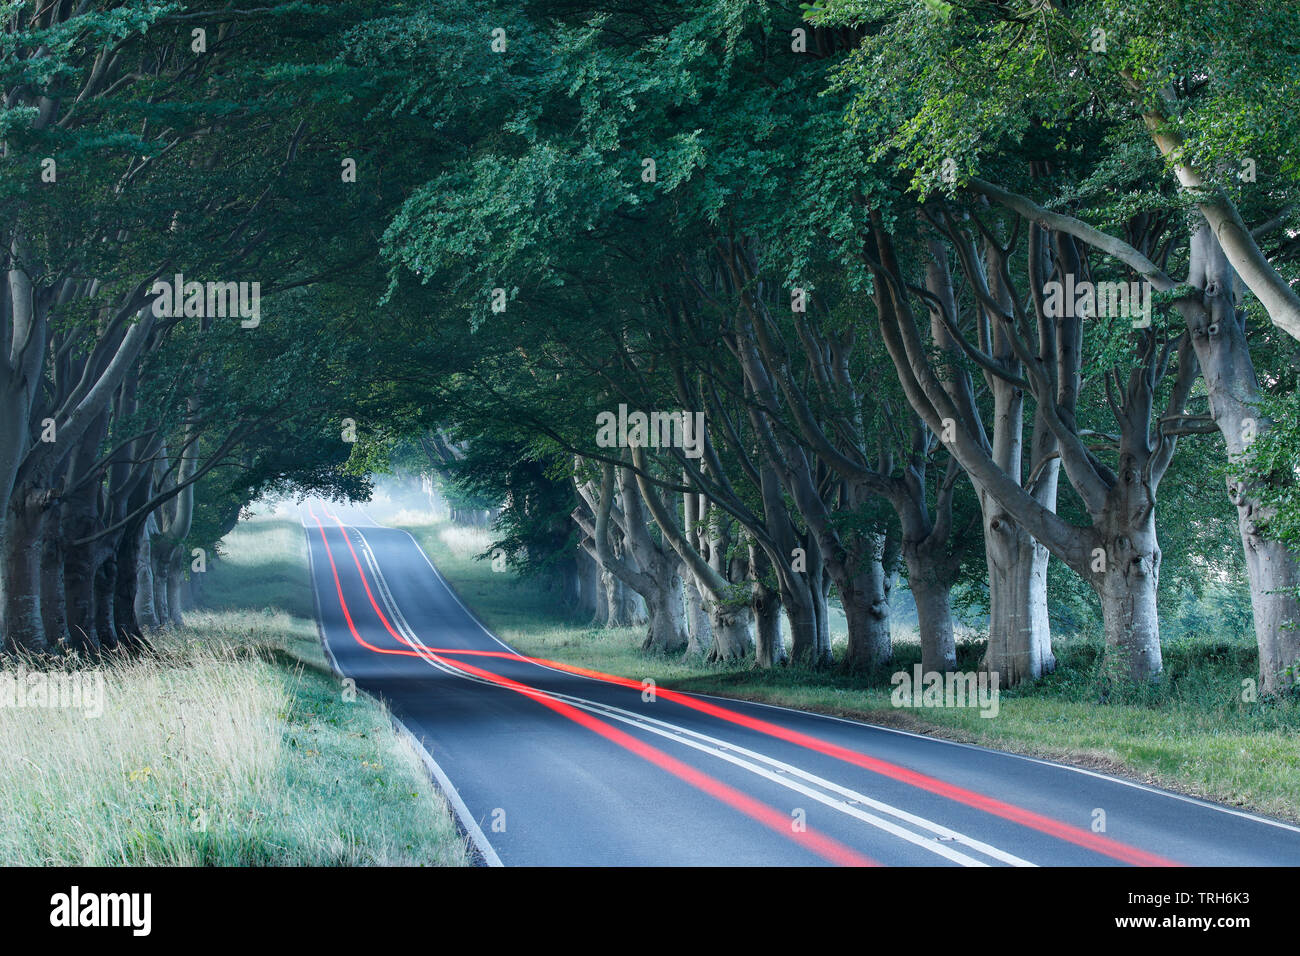 Avenue of trees lining the road to Wimborne, Dorset, England, UK Stock Photo